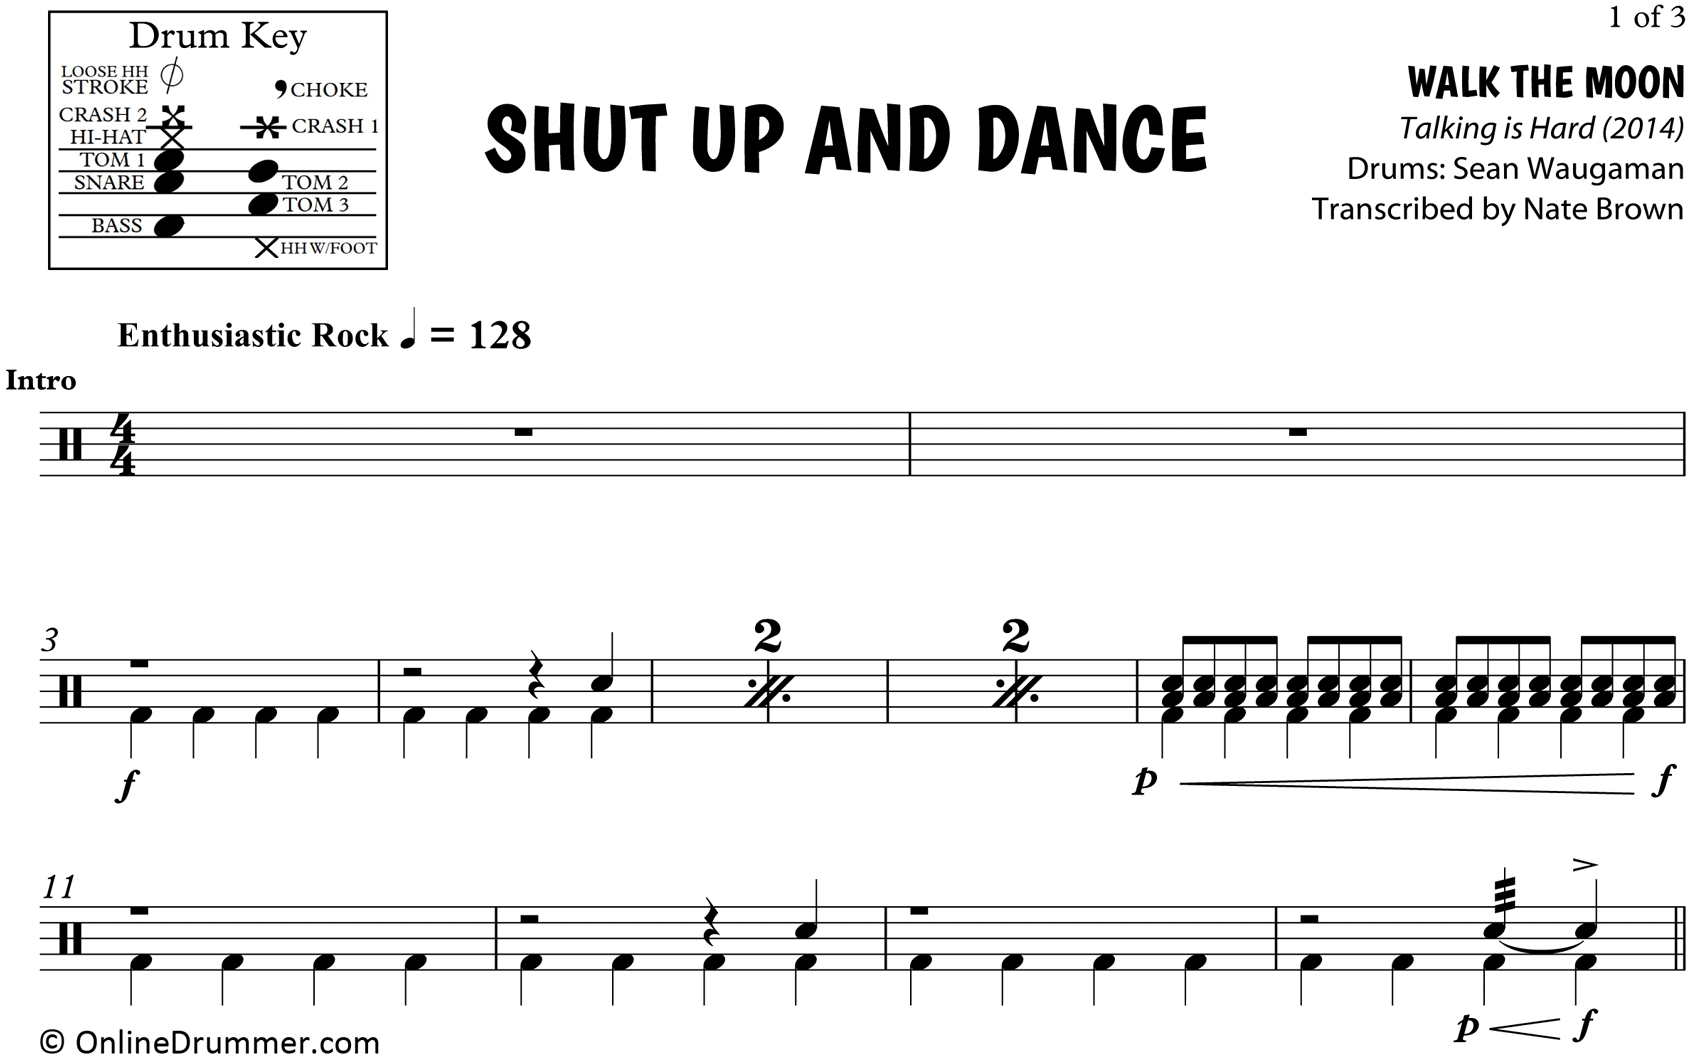 Shut Up and Dance - Walk The Moon - Drum Sheet Music